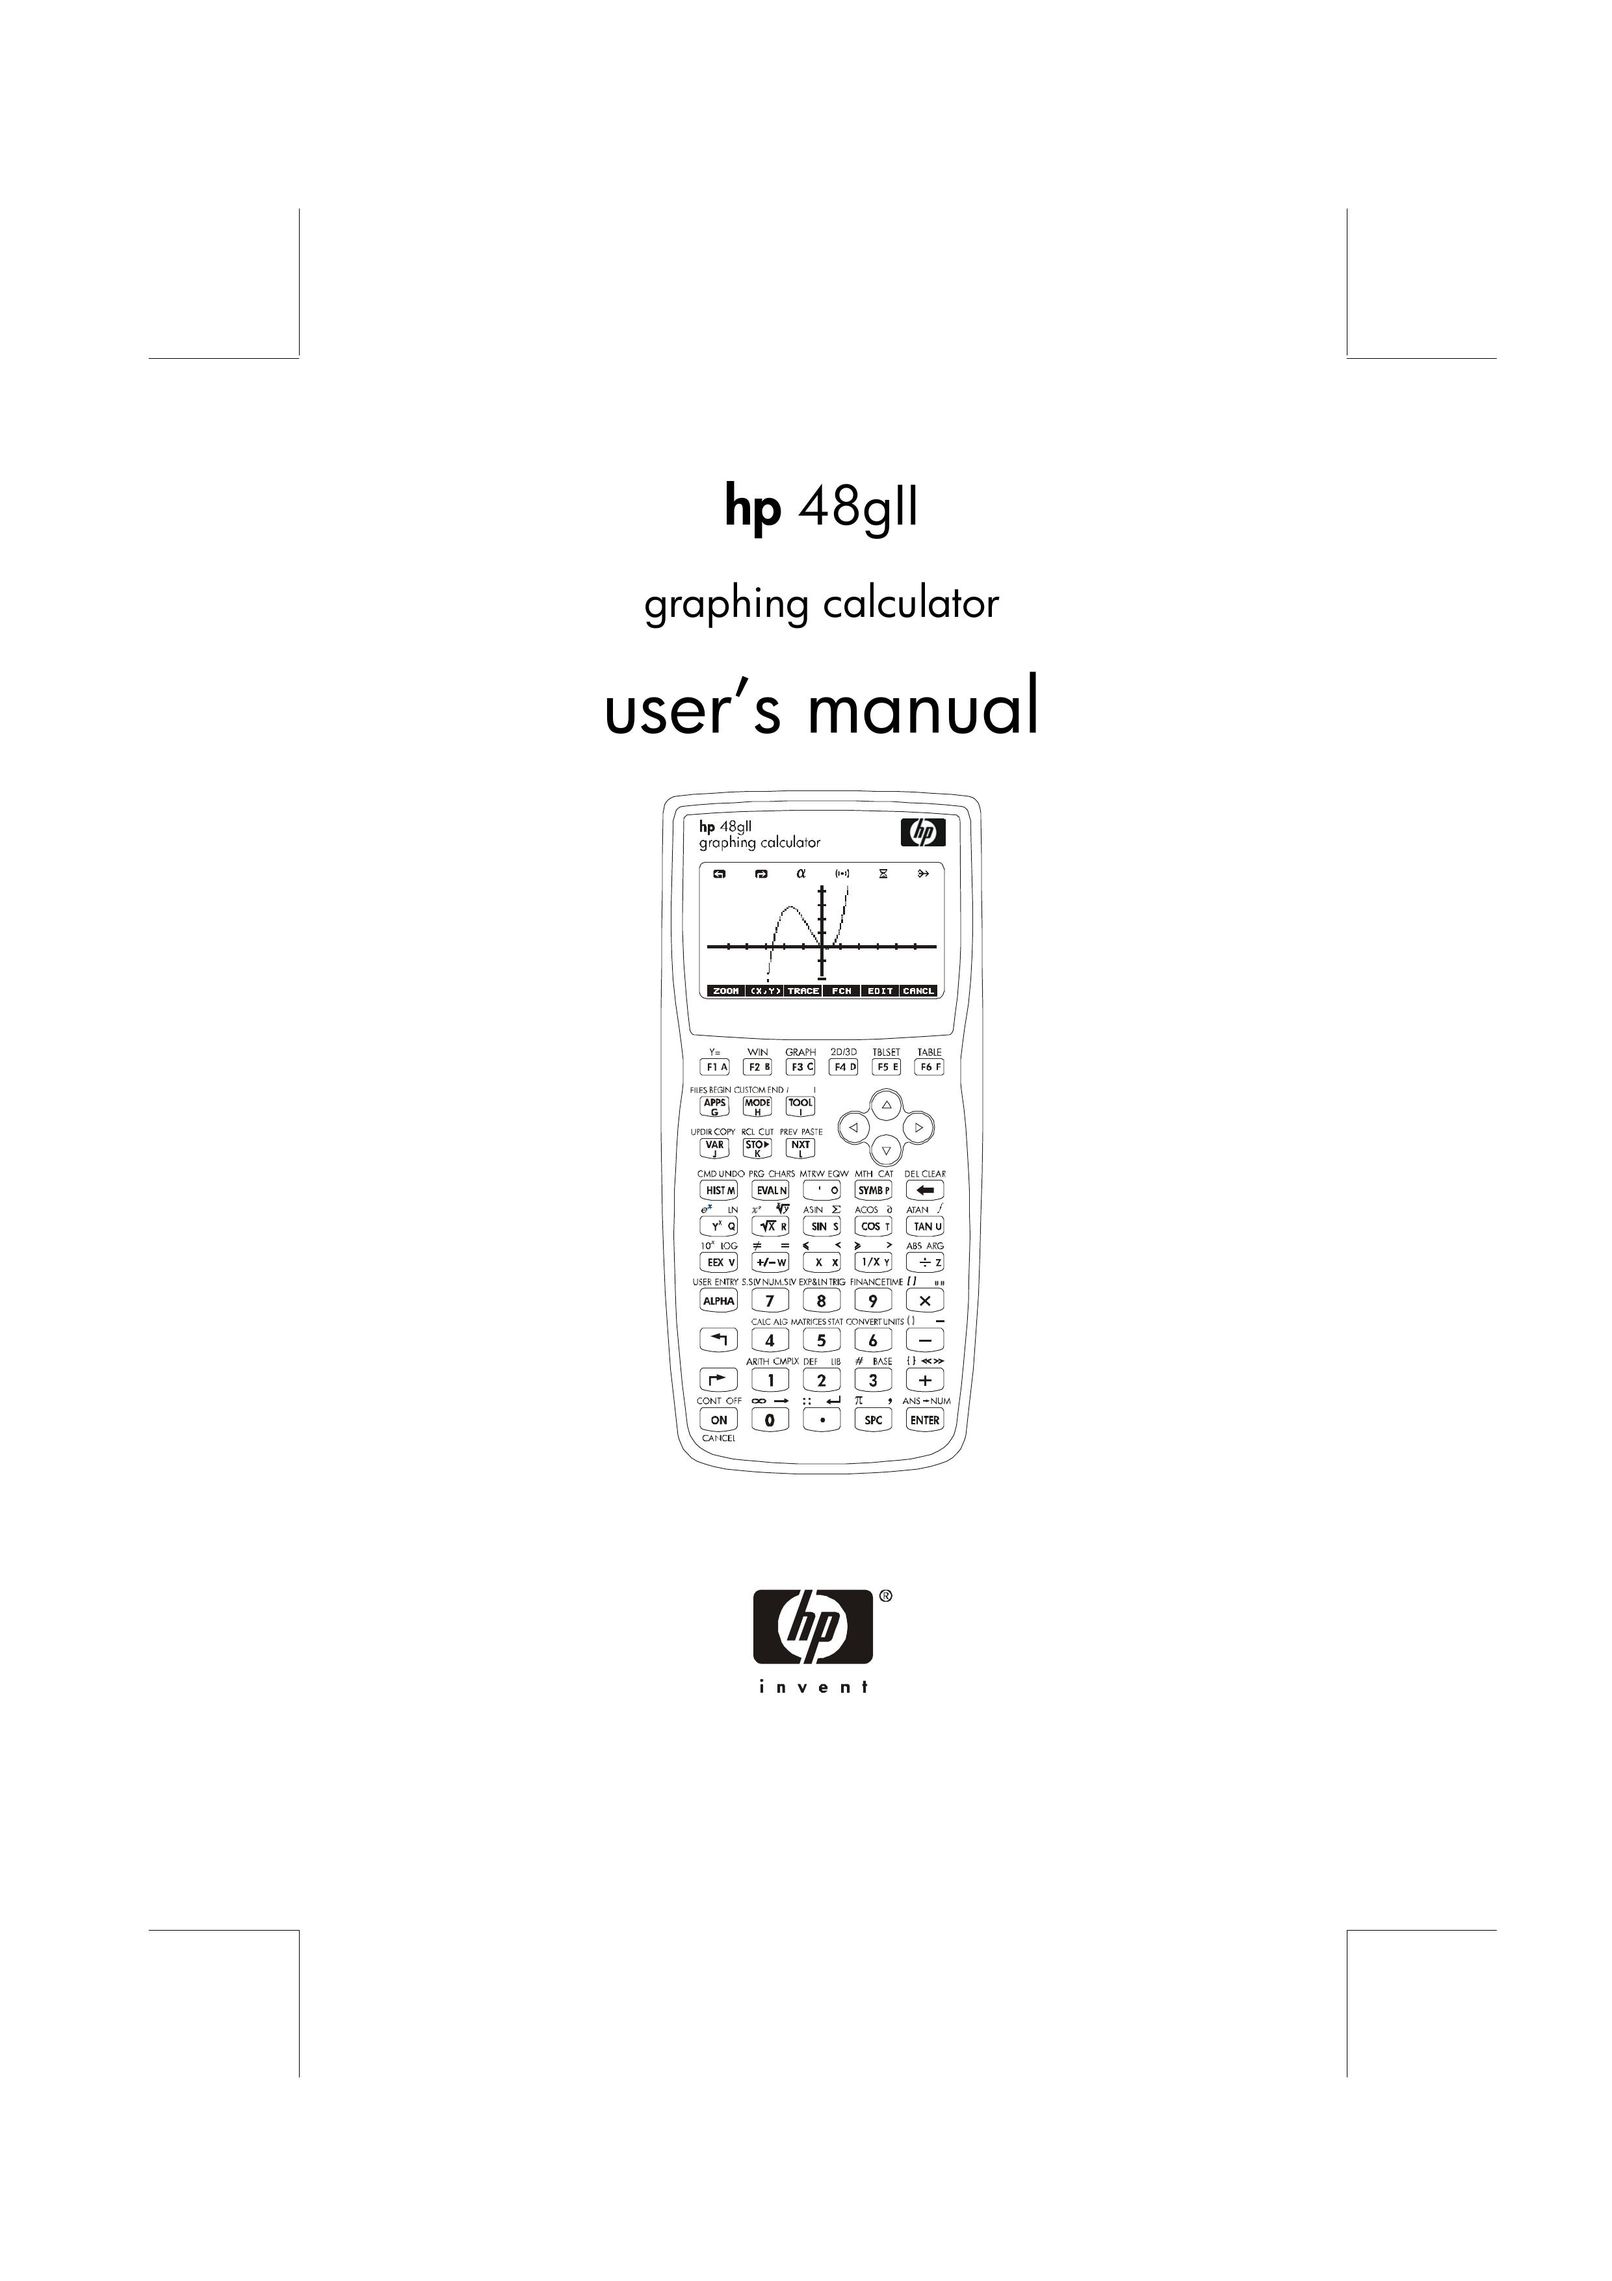 HP (Hewlett-Packard) 48gII Calculator User Manual